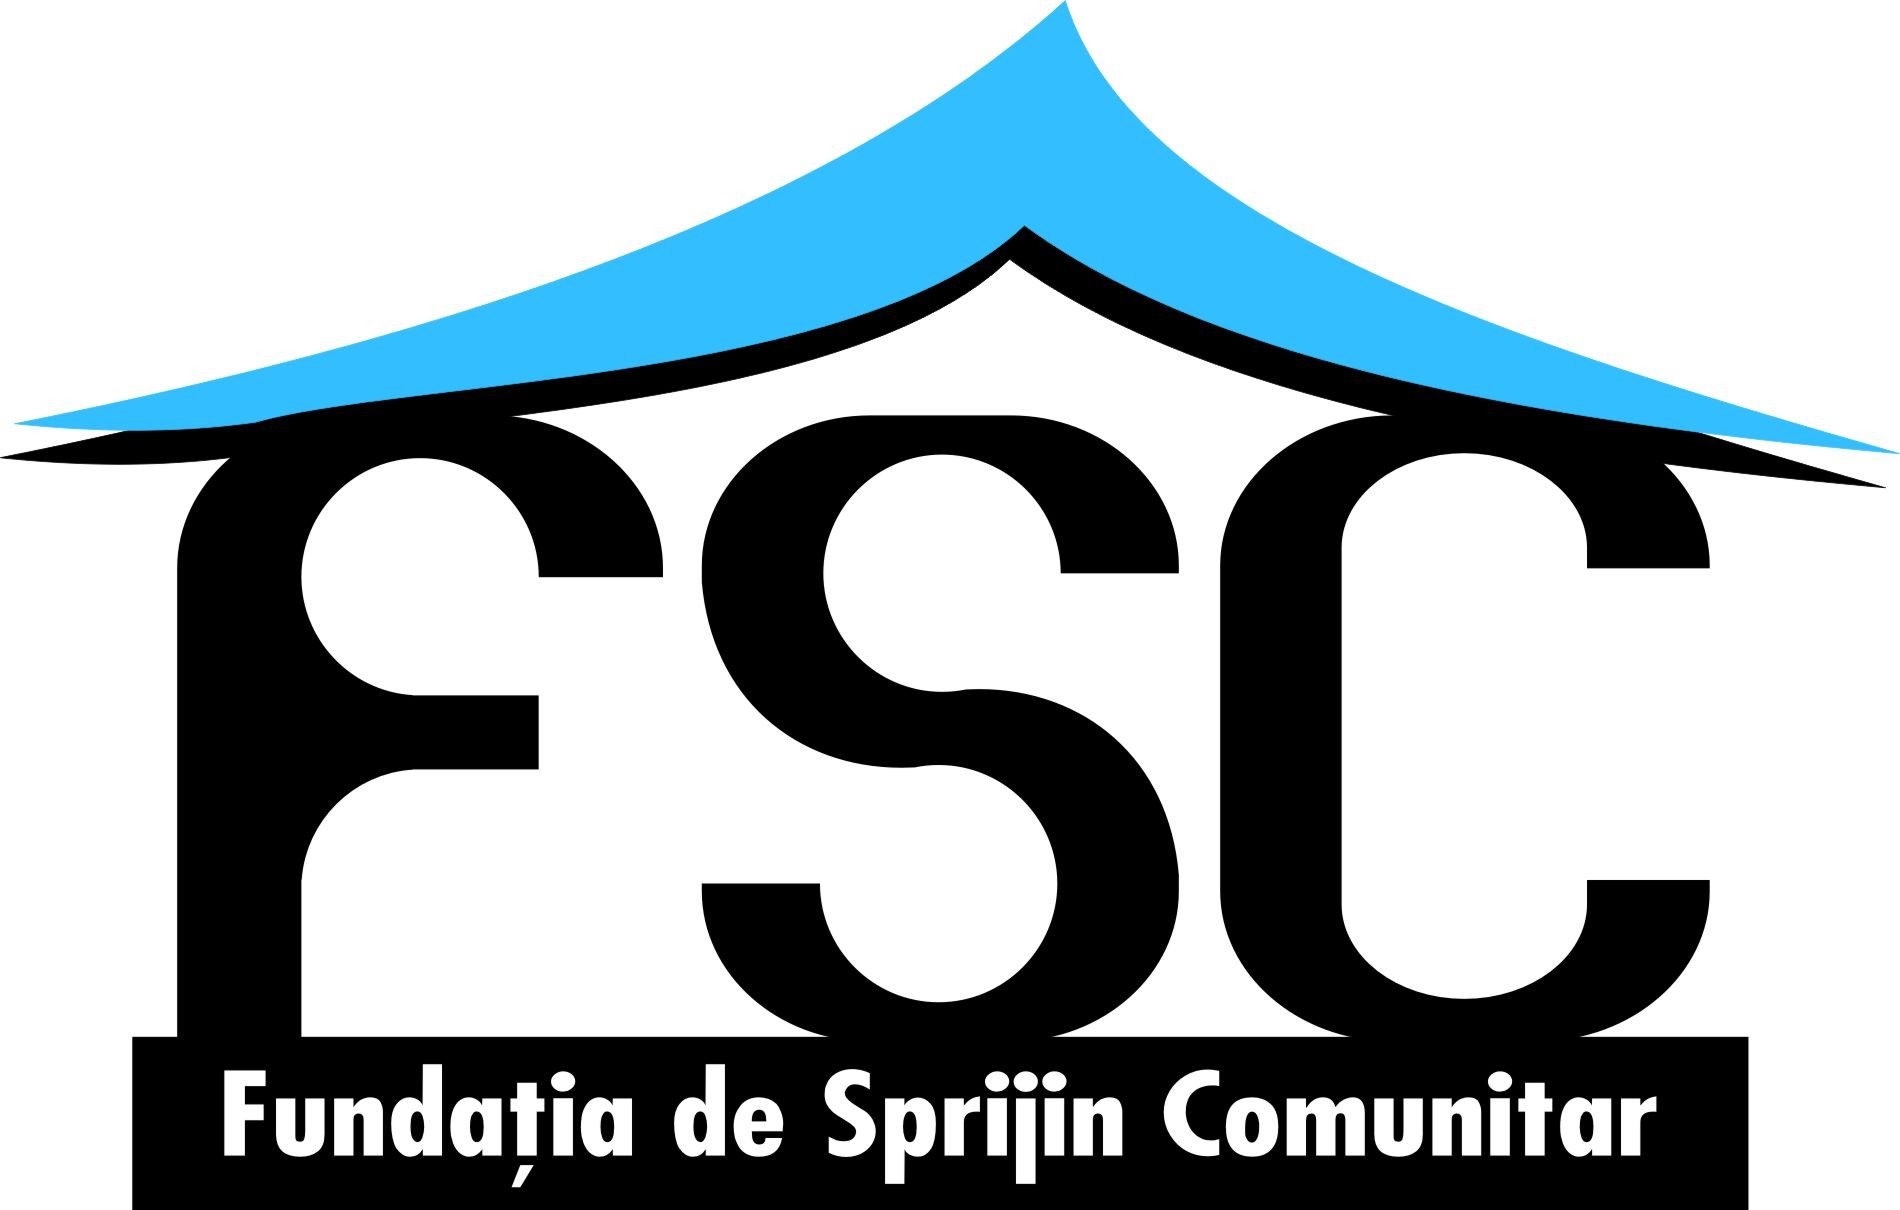 Fundatia de Sprijin Comunitar logo